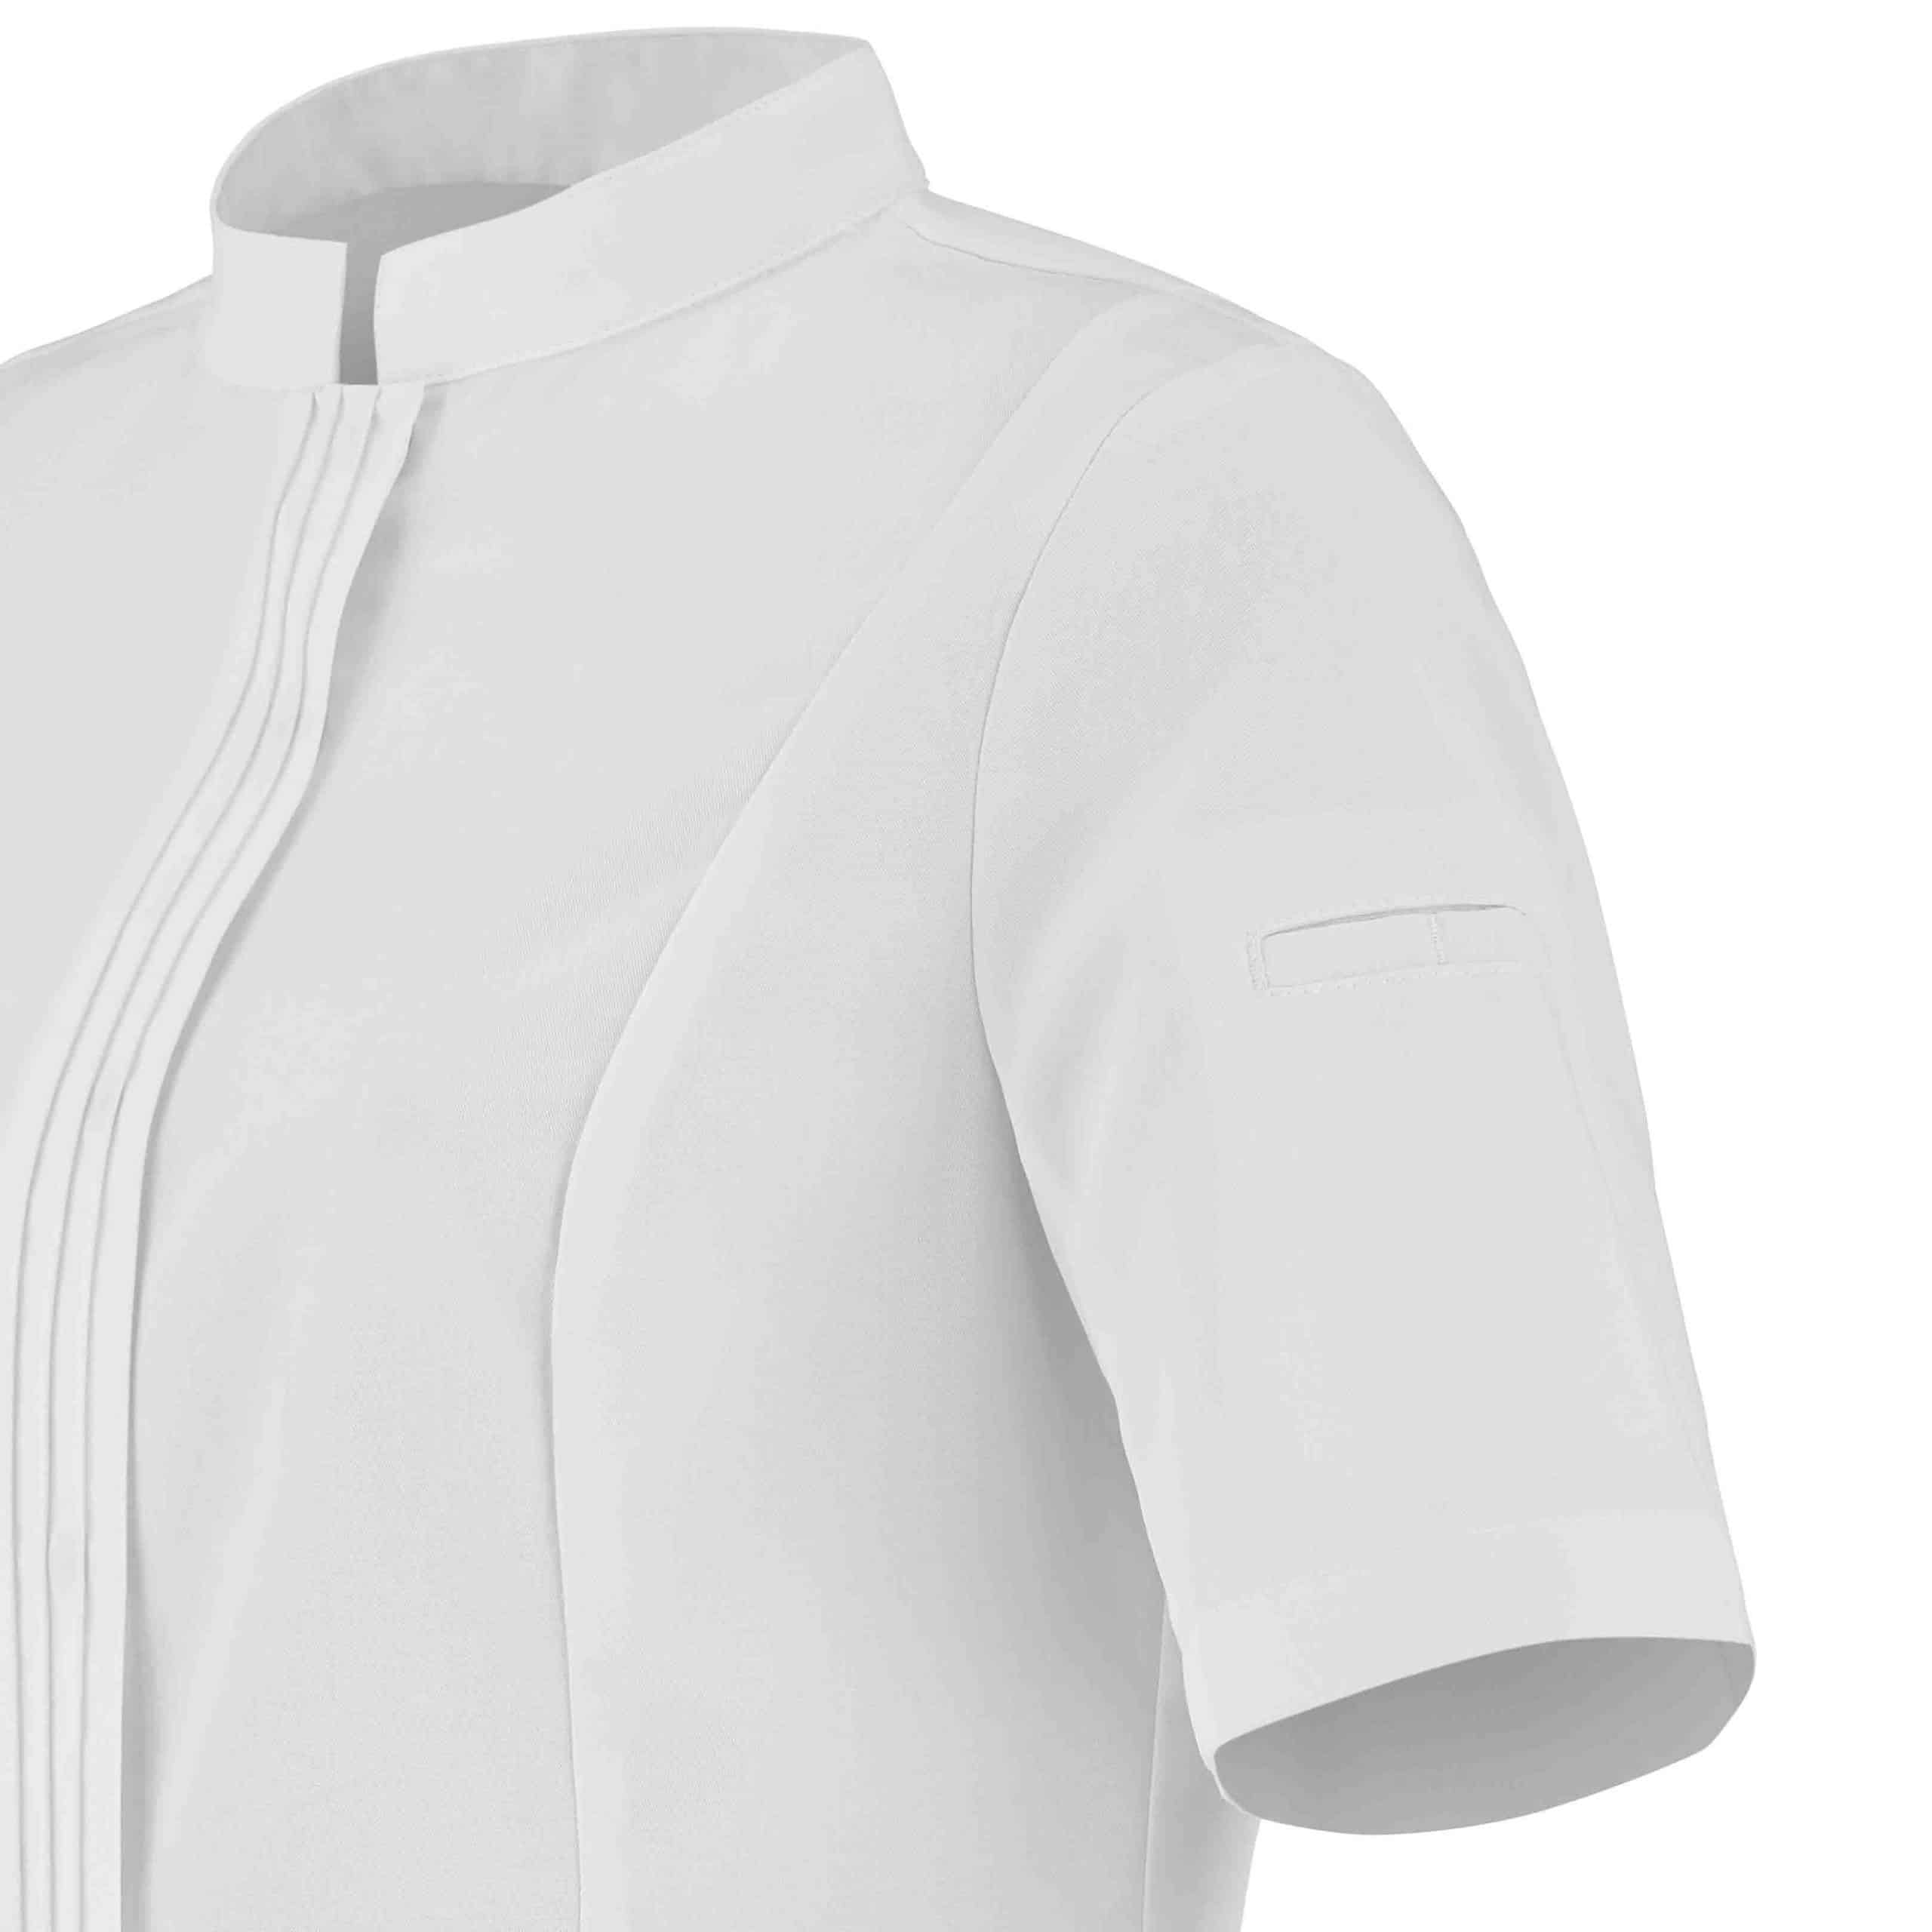 Zoom pocket CRISTAL jacket short sleeves woman white.